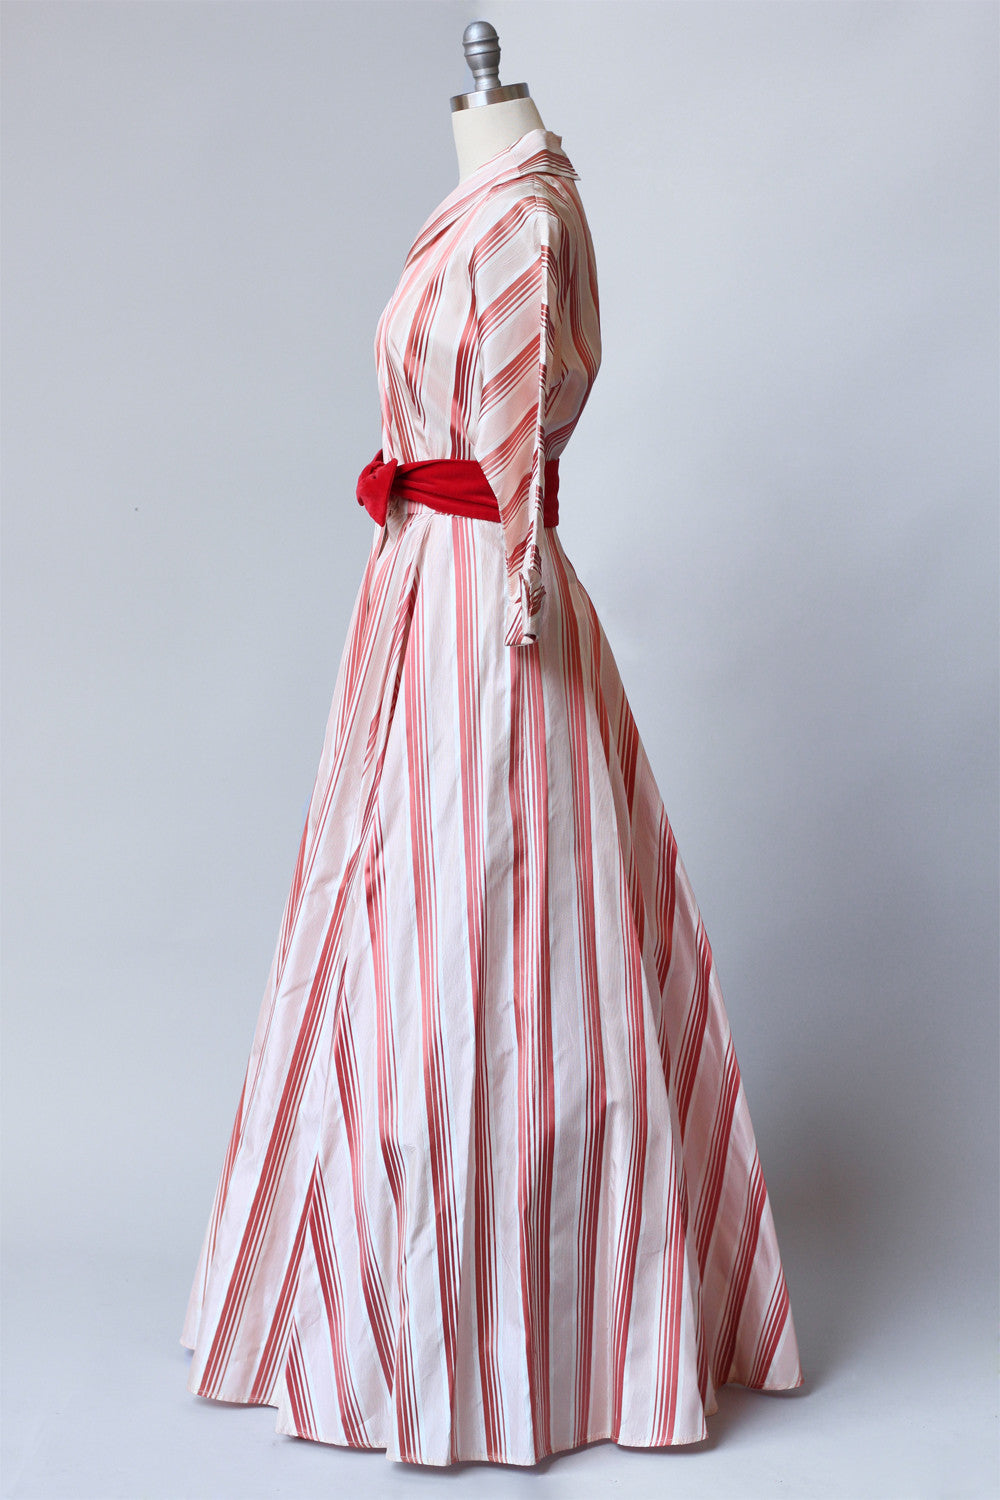 Rare 1950s New Look Striped Taffeta House Coat Dress